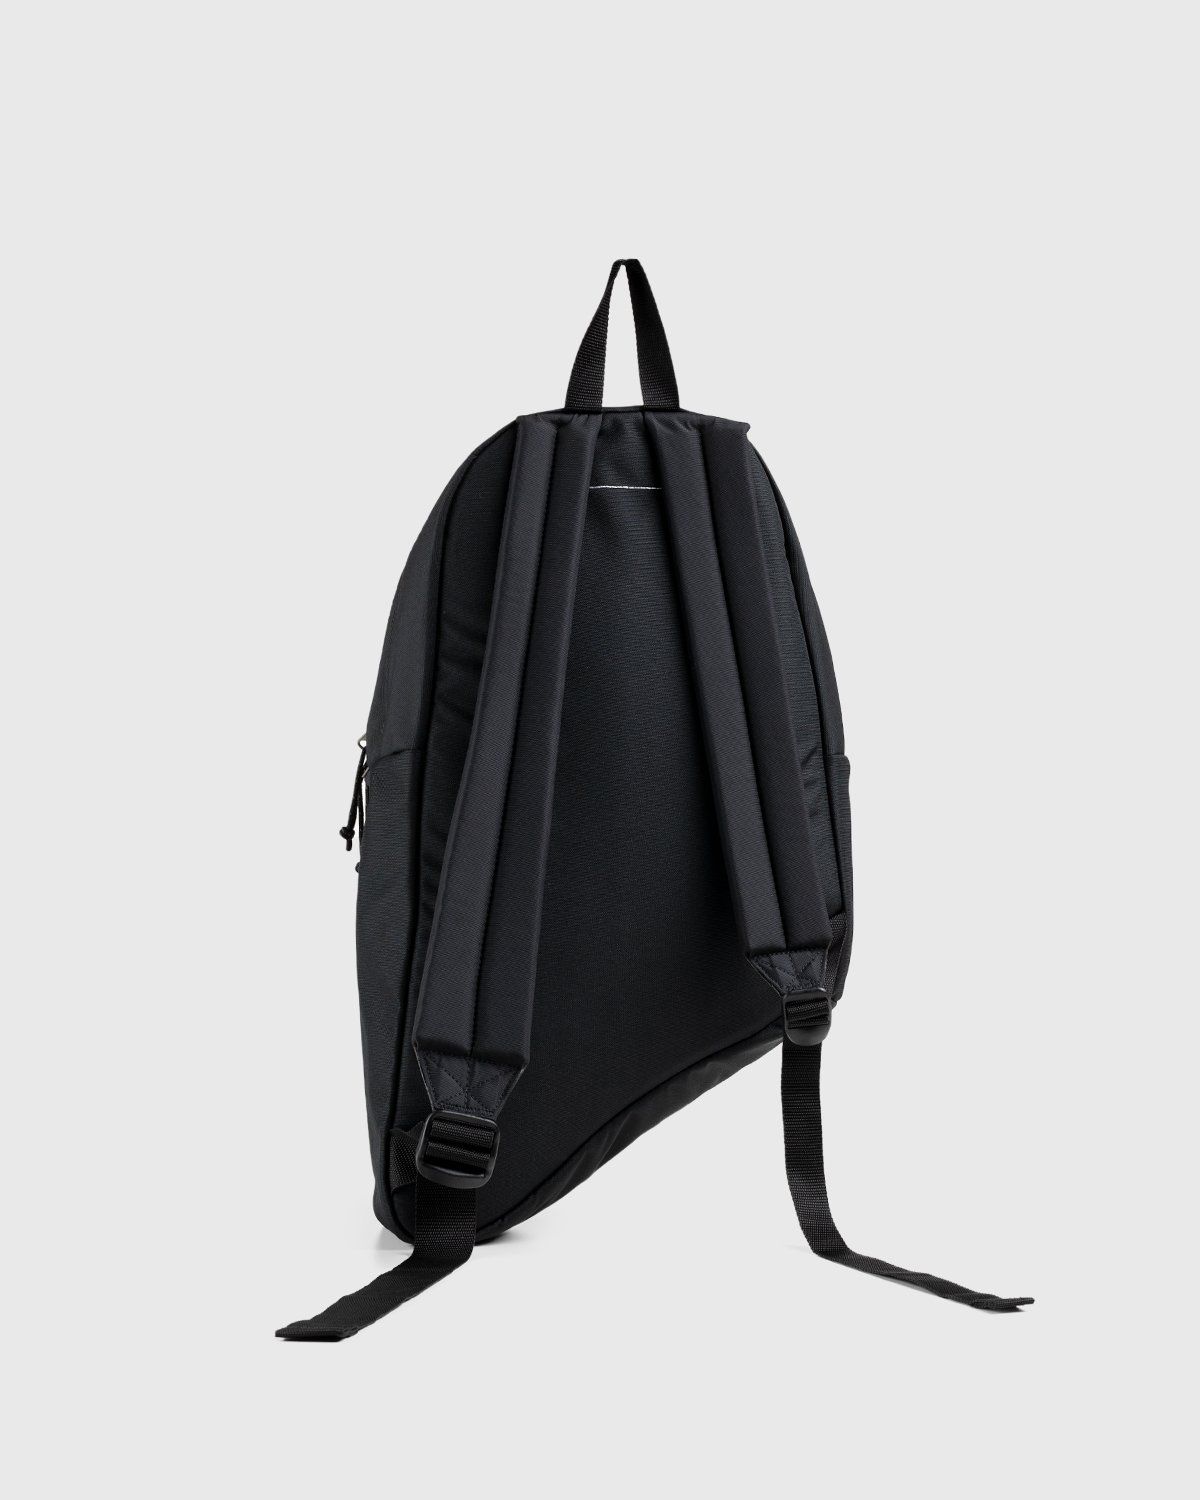 MM6 Maison Margiela x Eastpak – Zaino Backpack Black